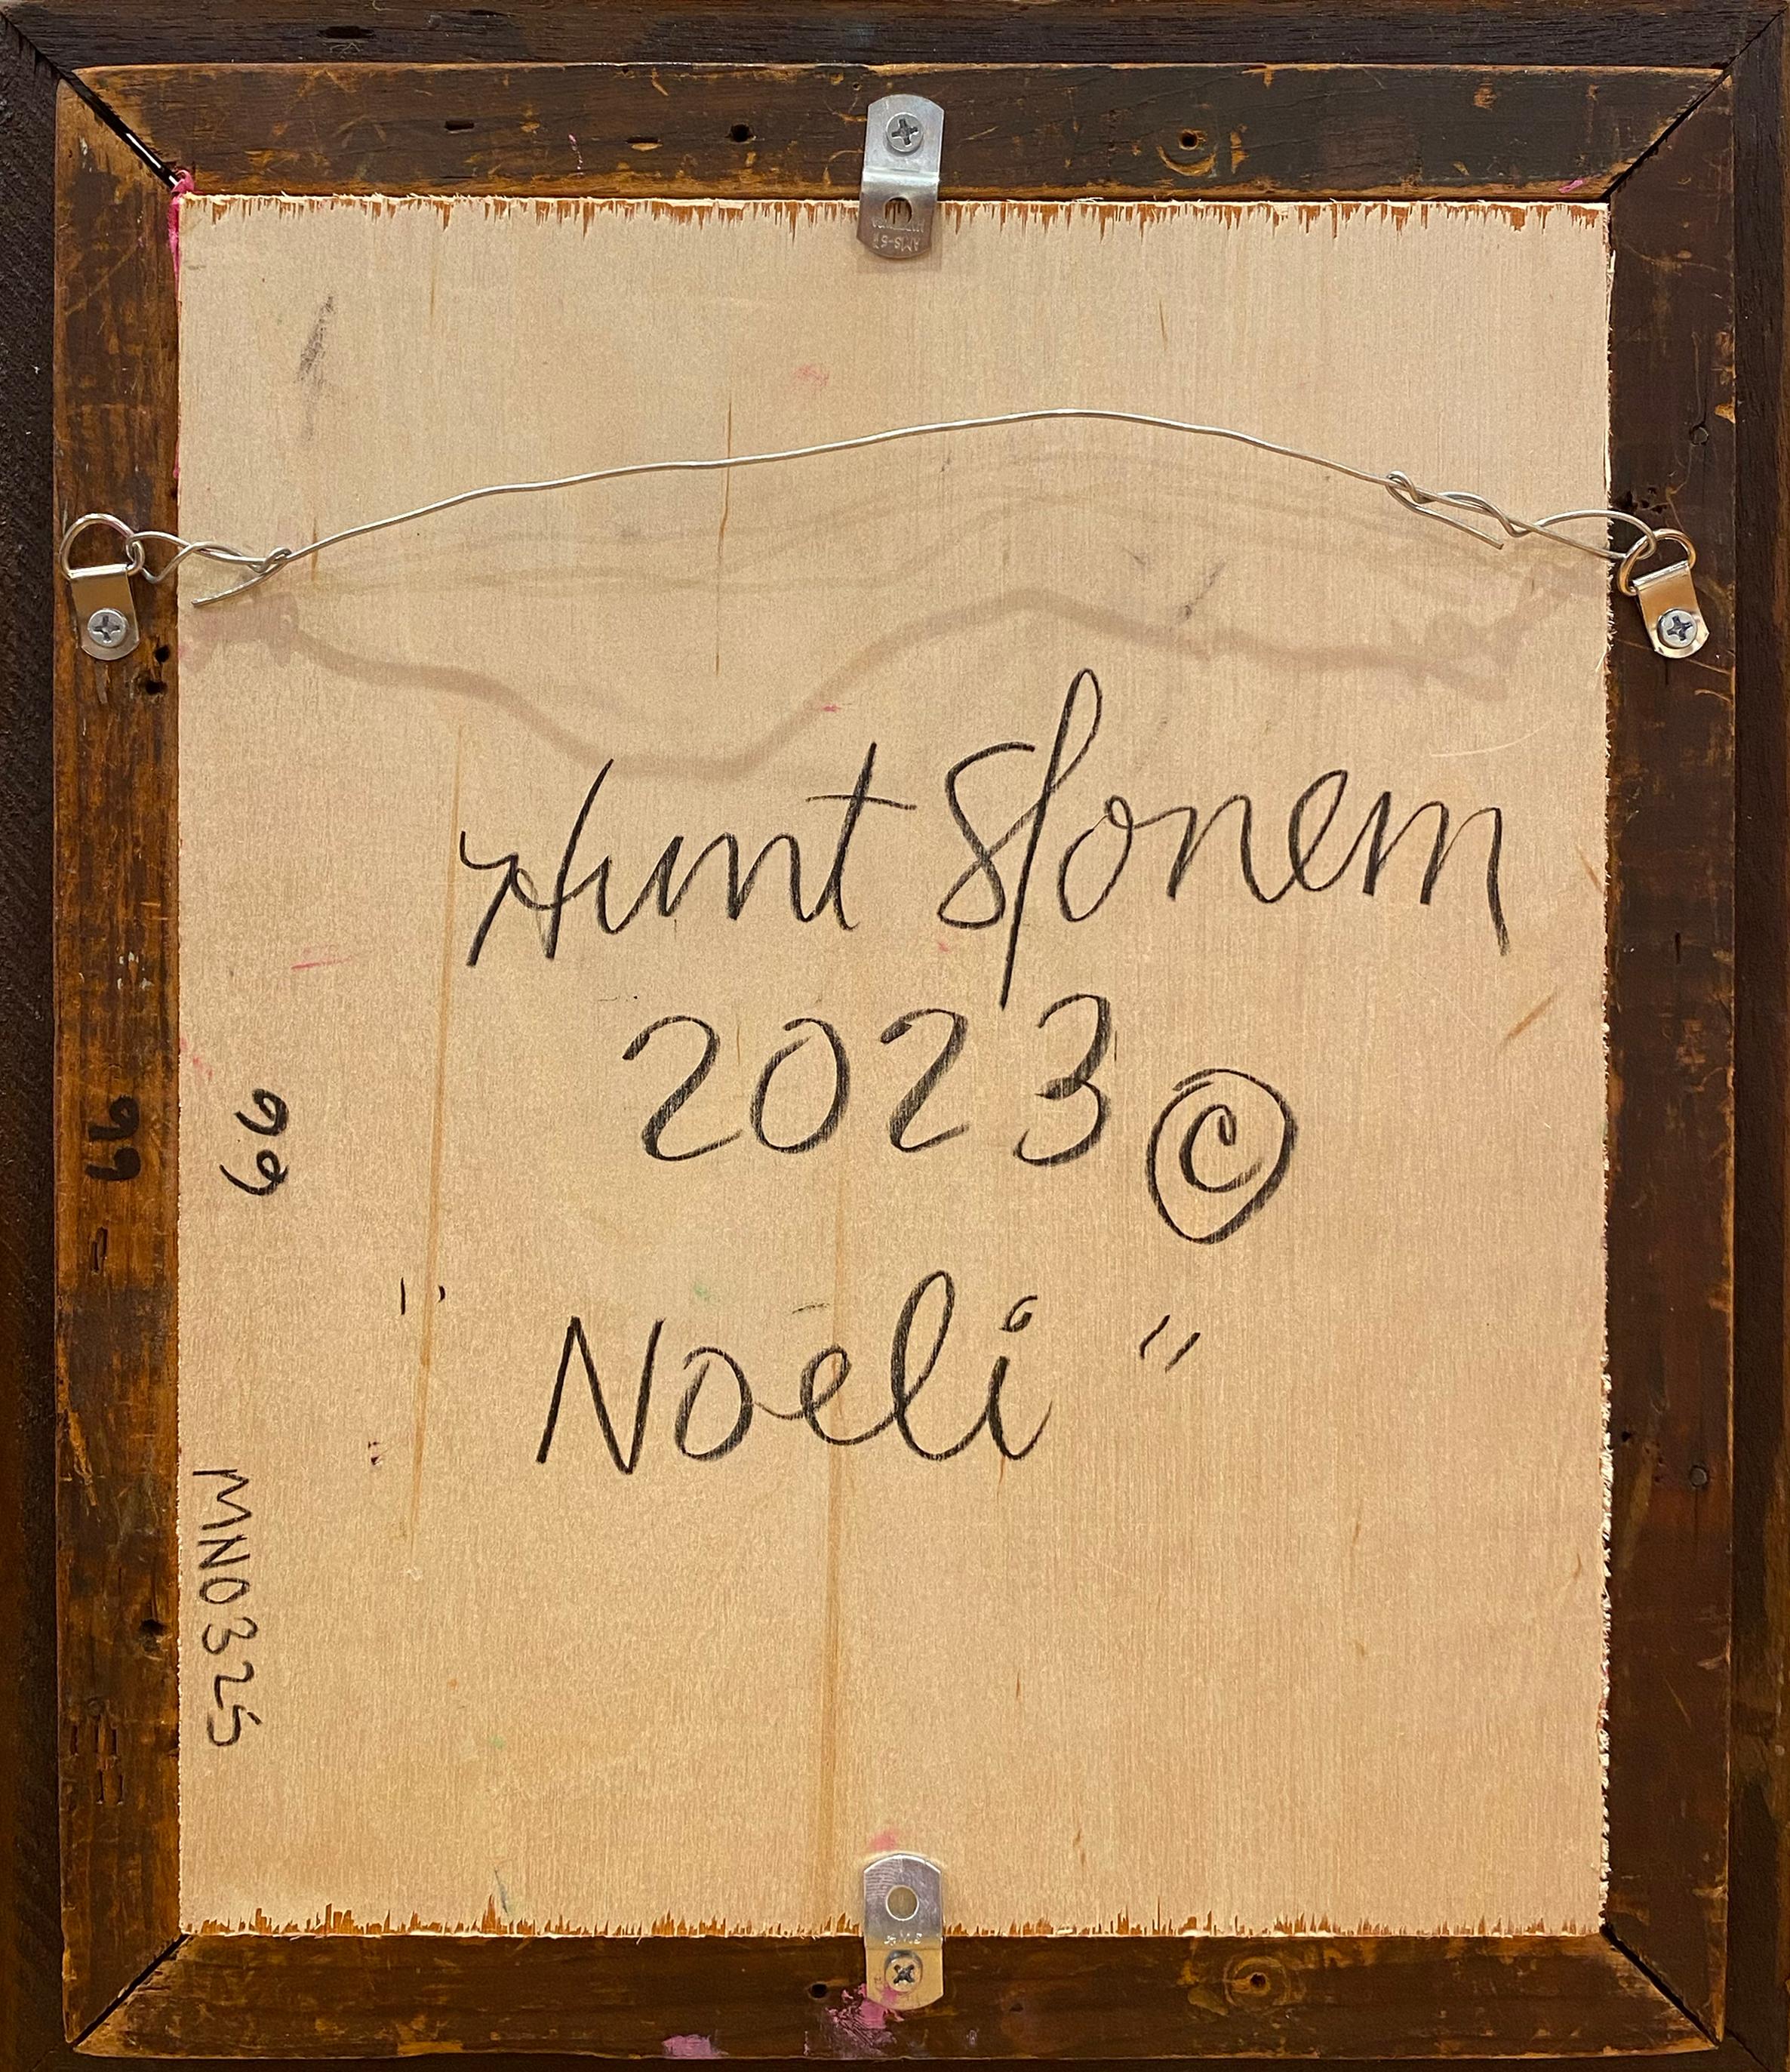 Artist:  Slonem, Hunt
Title:  Noeli
Series: Bunnies
Date:  2023
Medium:  Oil on Wood
Unframed Dimensions:  11.25